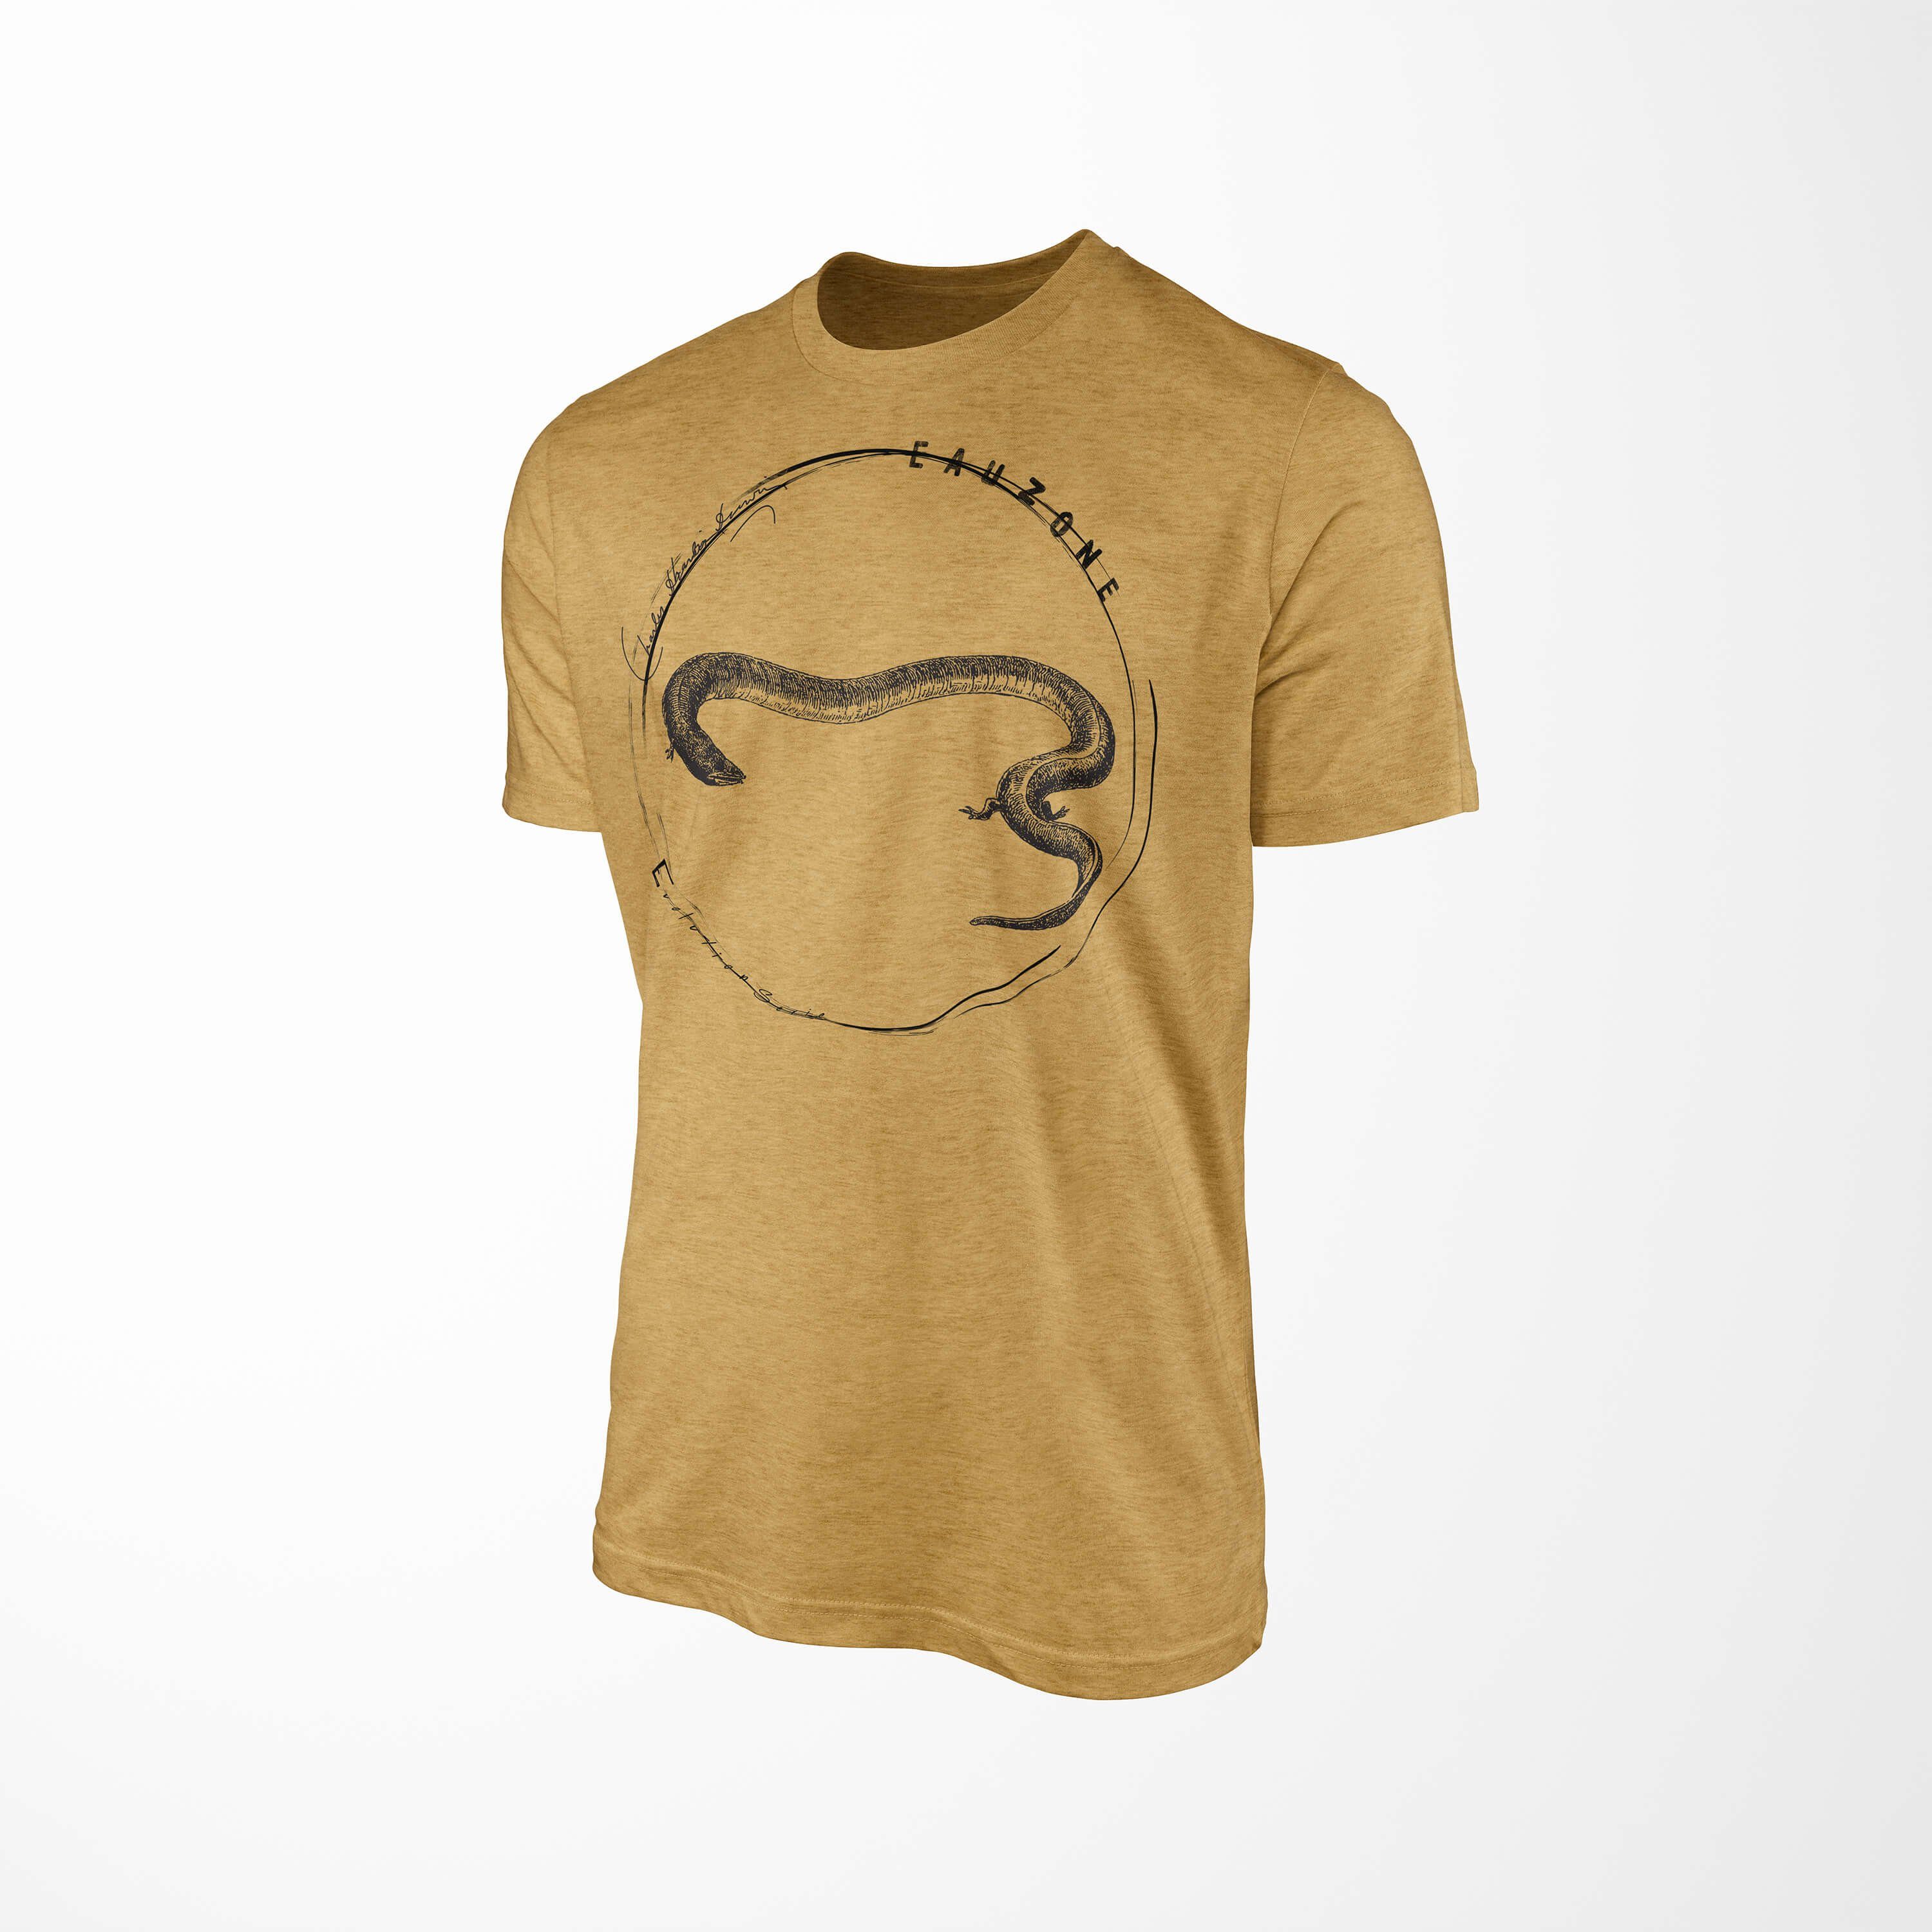 T-Shirt T-Shirt Herren Antique Gold Art Amphia Evolution Sinus